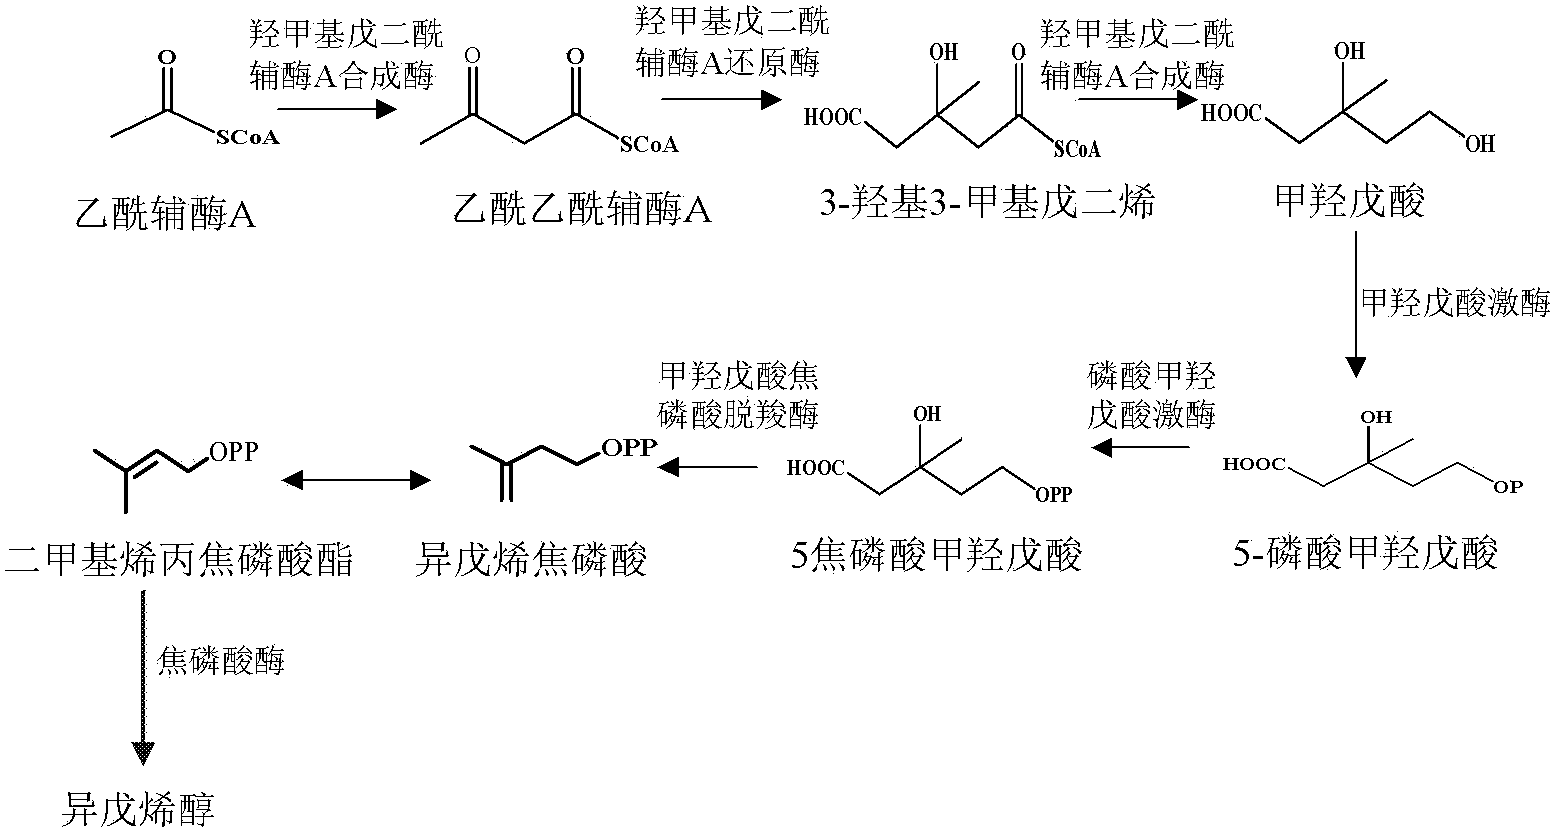 Method for synthesizing isopentenol by biological methods